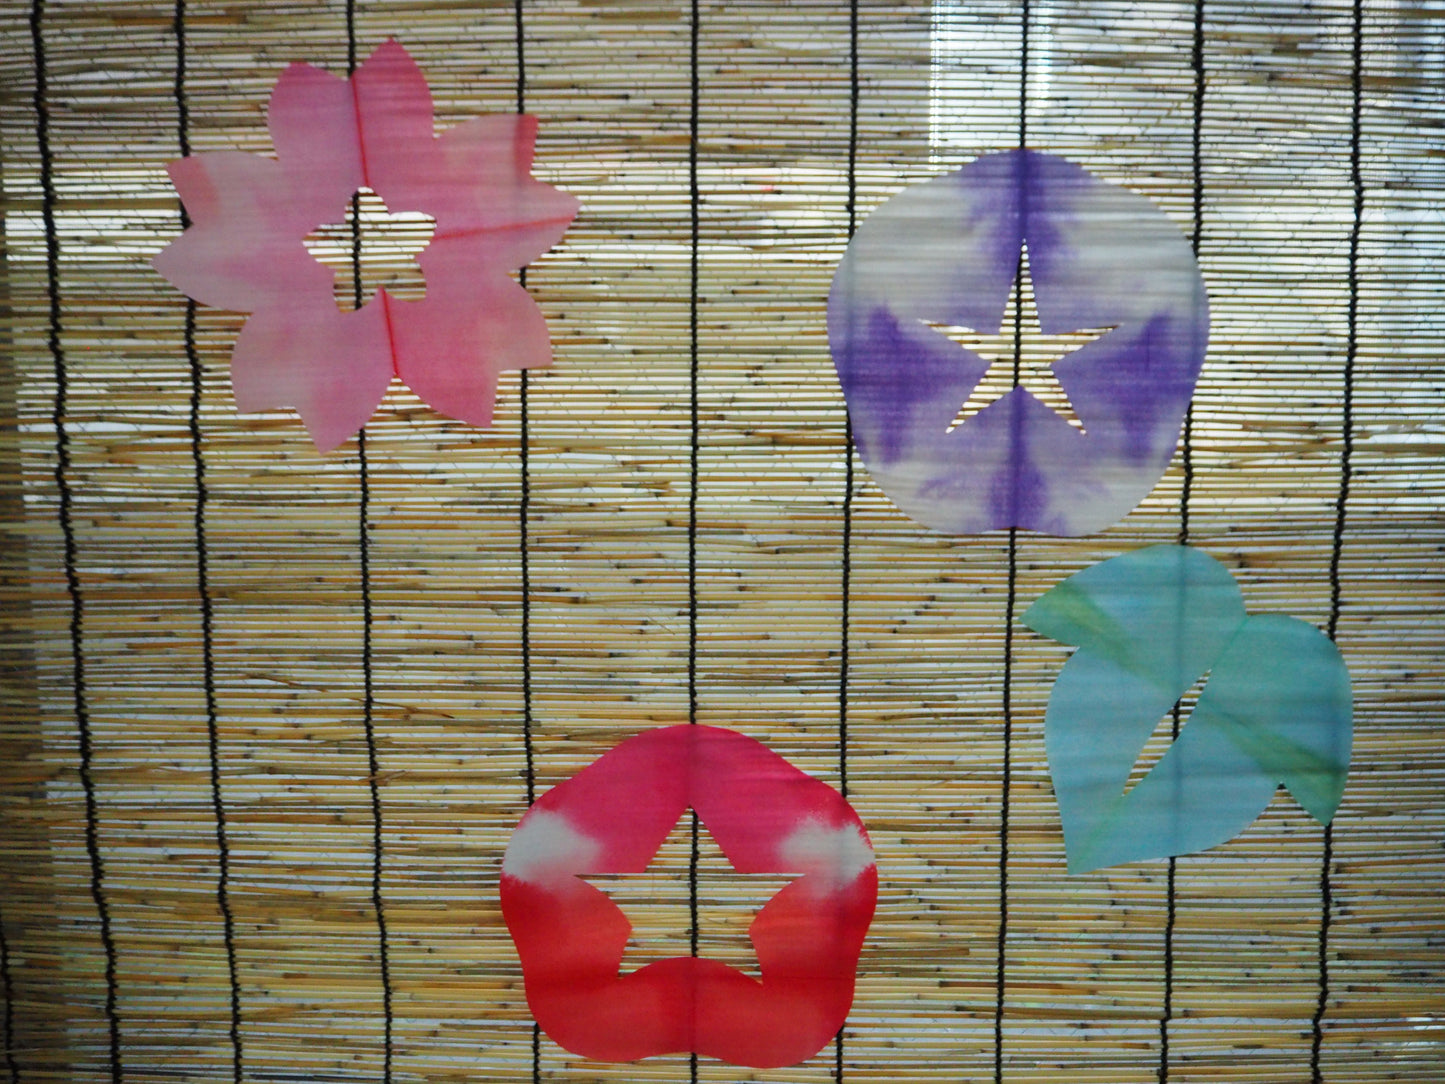 Inshu Japanese Paper (designed by Sakura March)